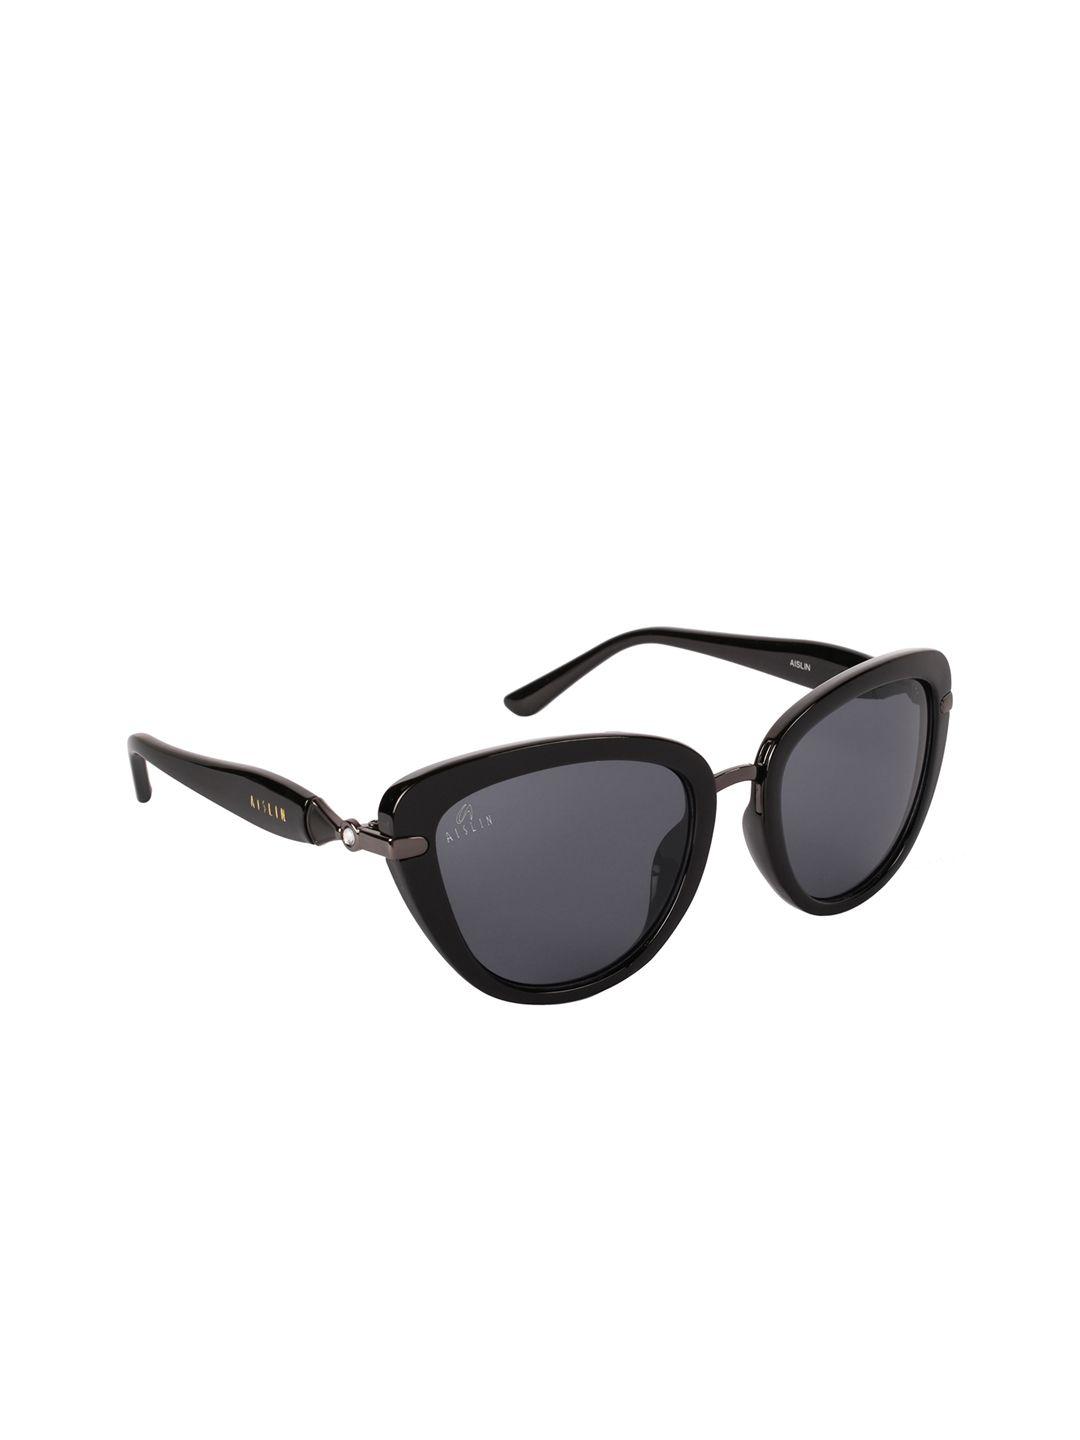 aislin women grey lens cateye sunglasses es_14439-82-as-340-blk-bkgn-ce-59-g